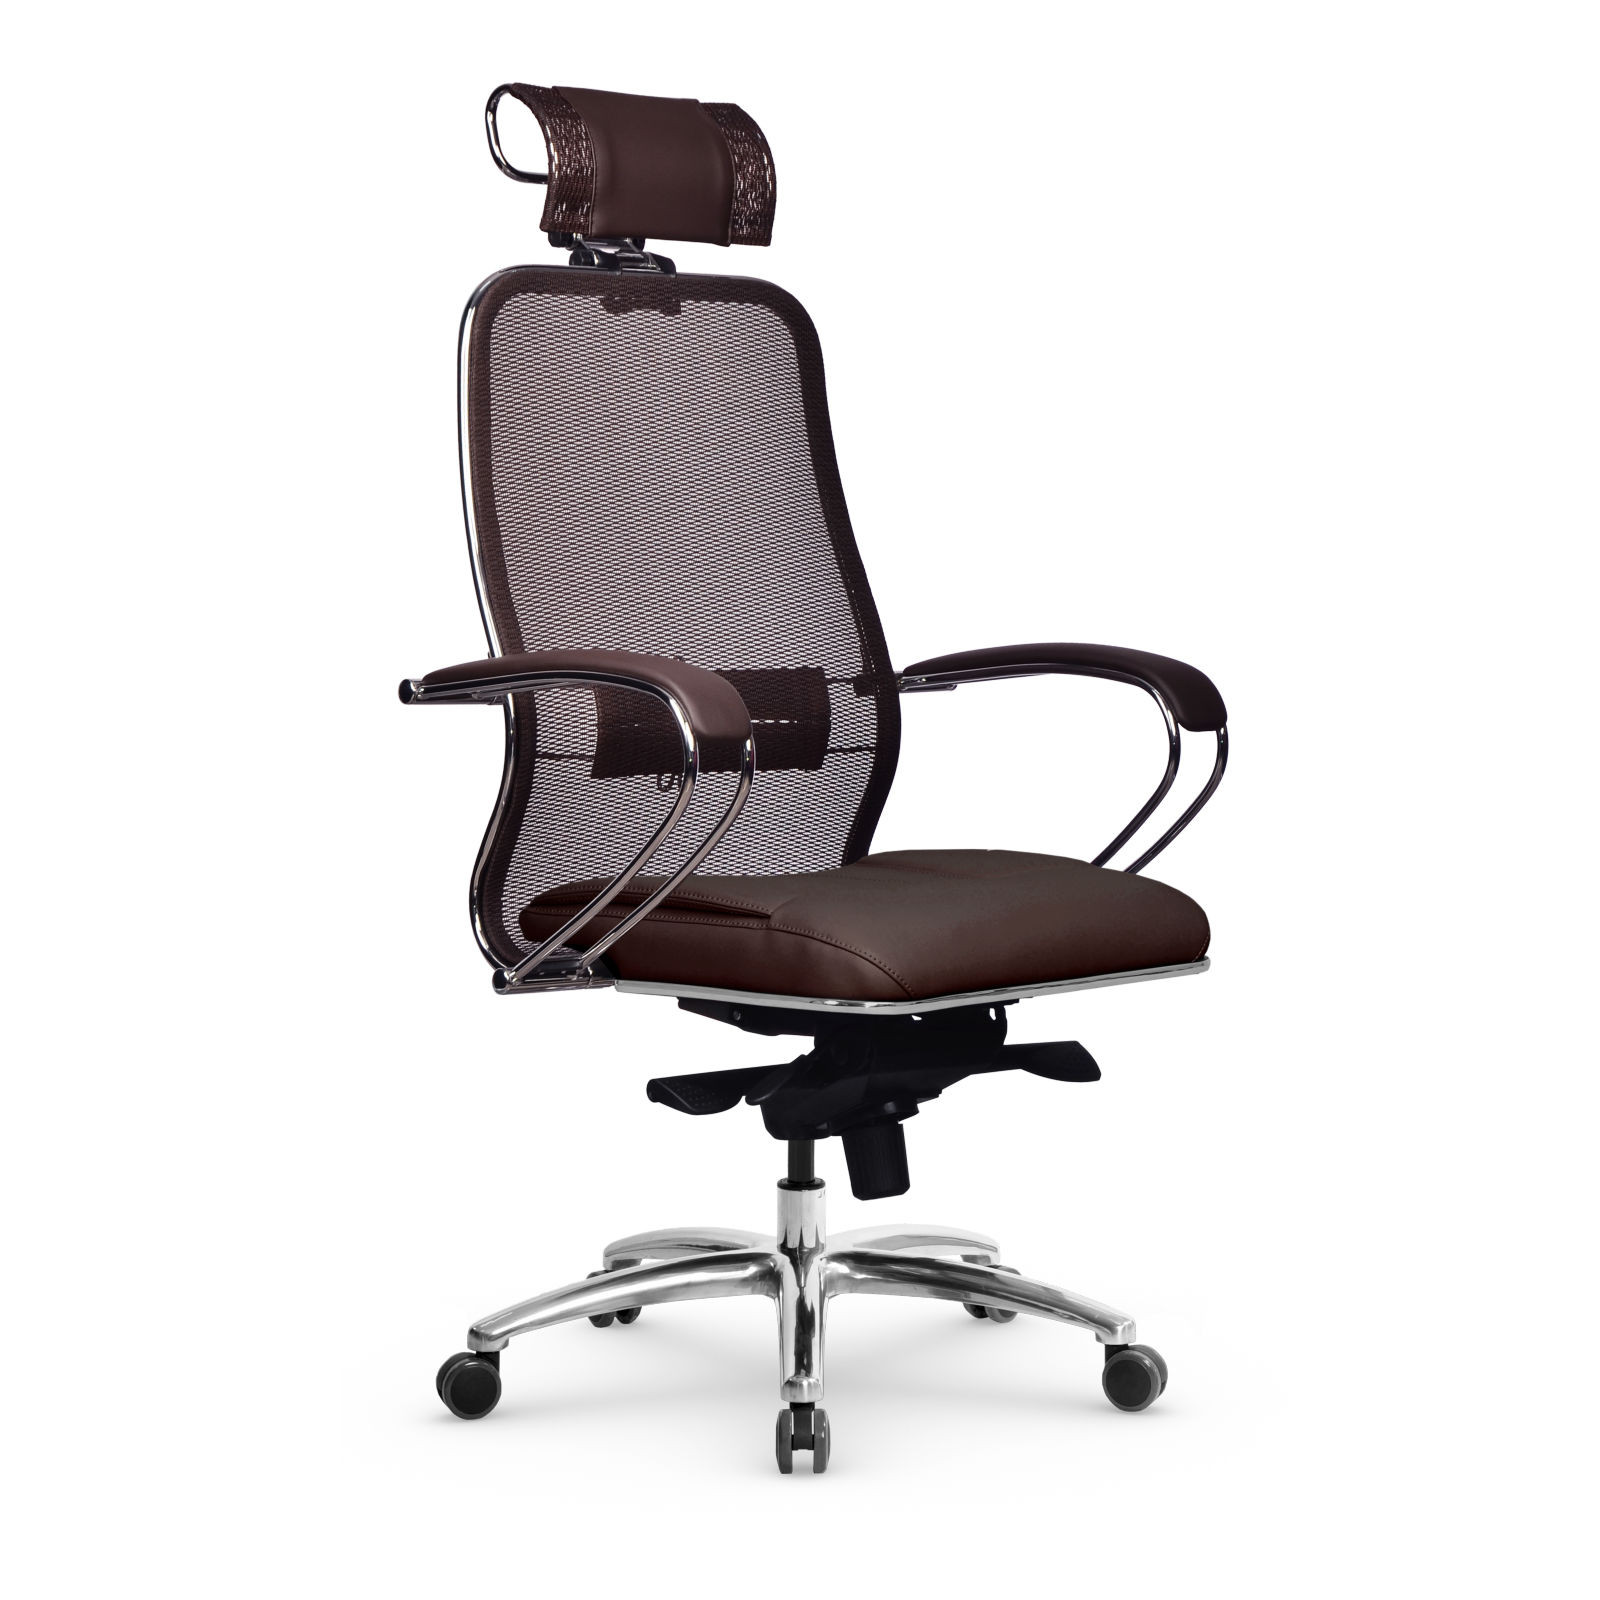 Кресло Samurai SL-2.04 MPES, офисное кресло, компьютерное кресло, кресло самурай, кресло для дома и офиса, кресто Metta (Коричневый)